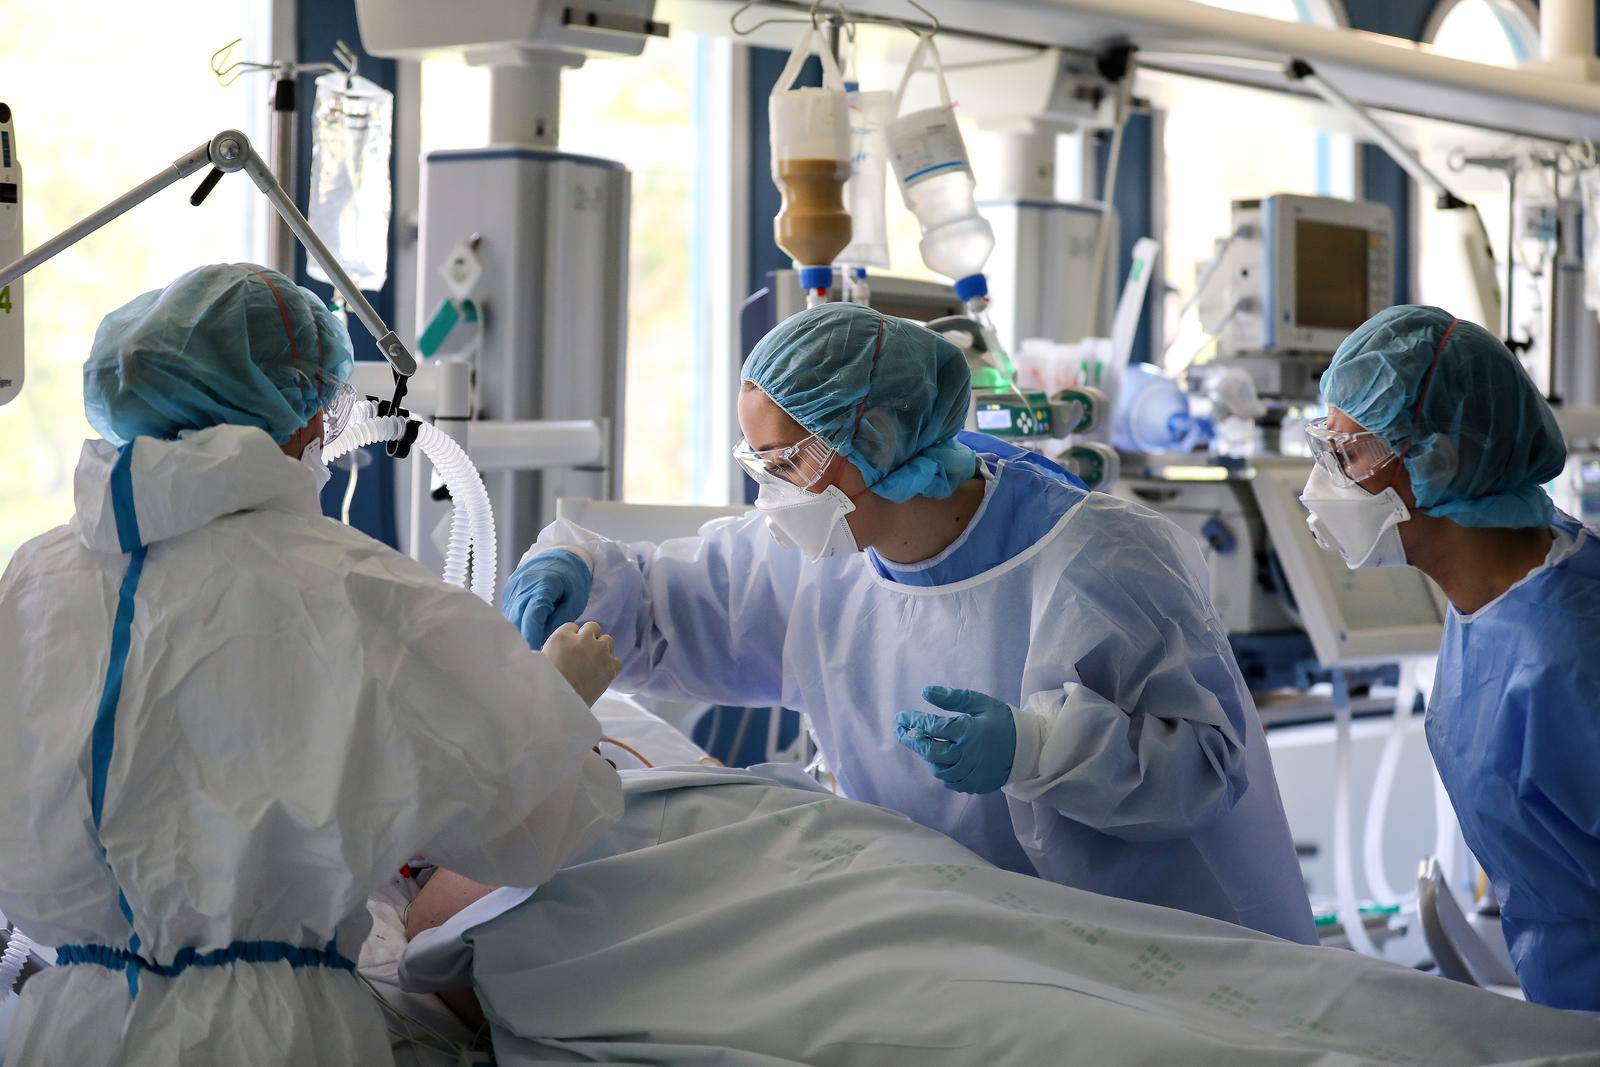 Bolnice pod pritiskom: KBC Sestre milosrdnice u dva dana potroši dvije tone kisika